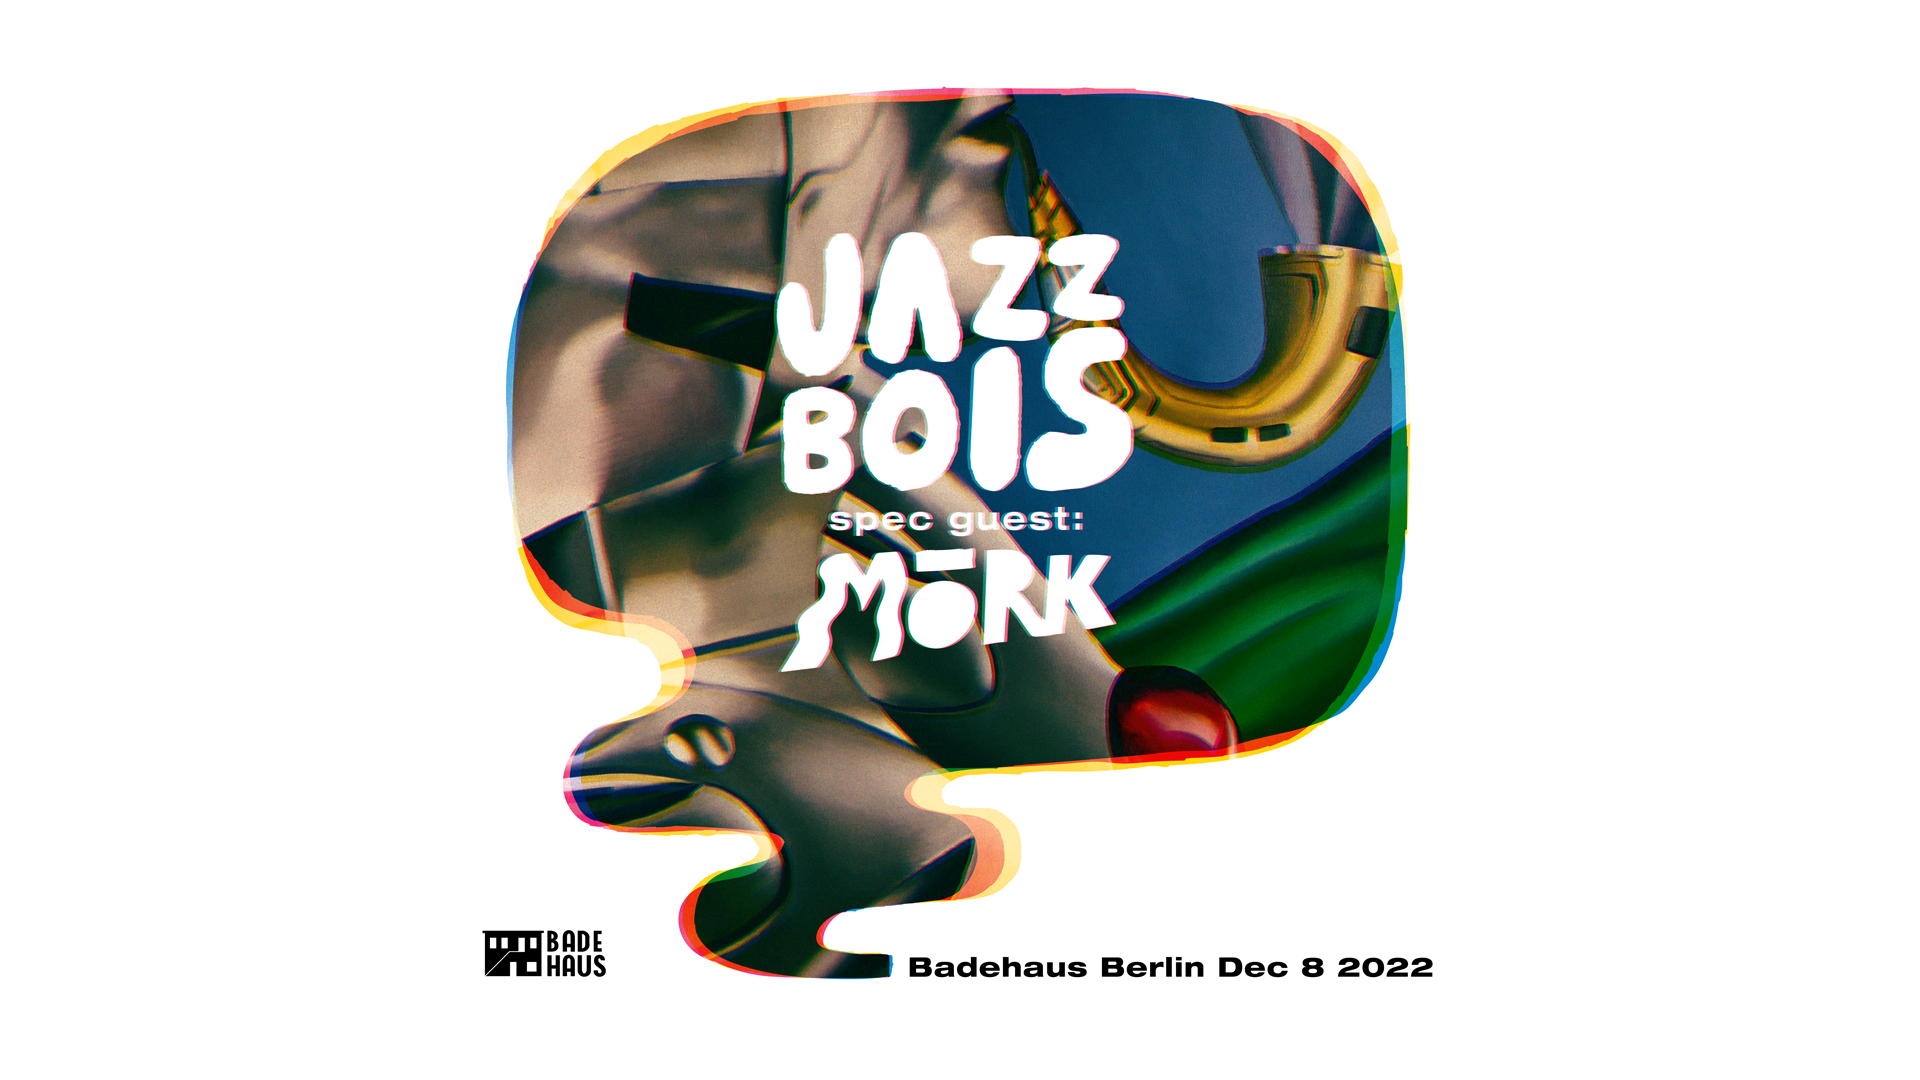 Jazzbois + Mörk